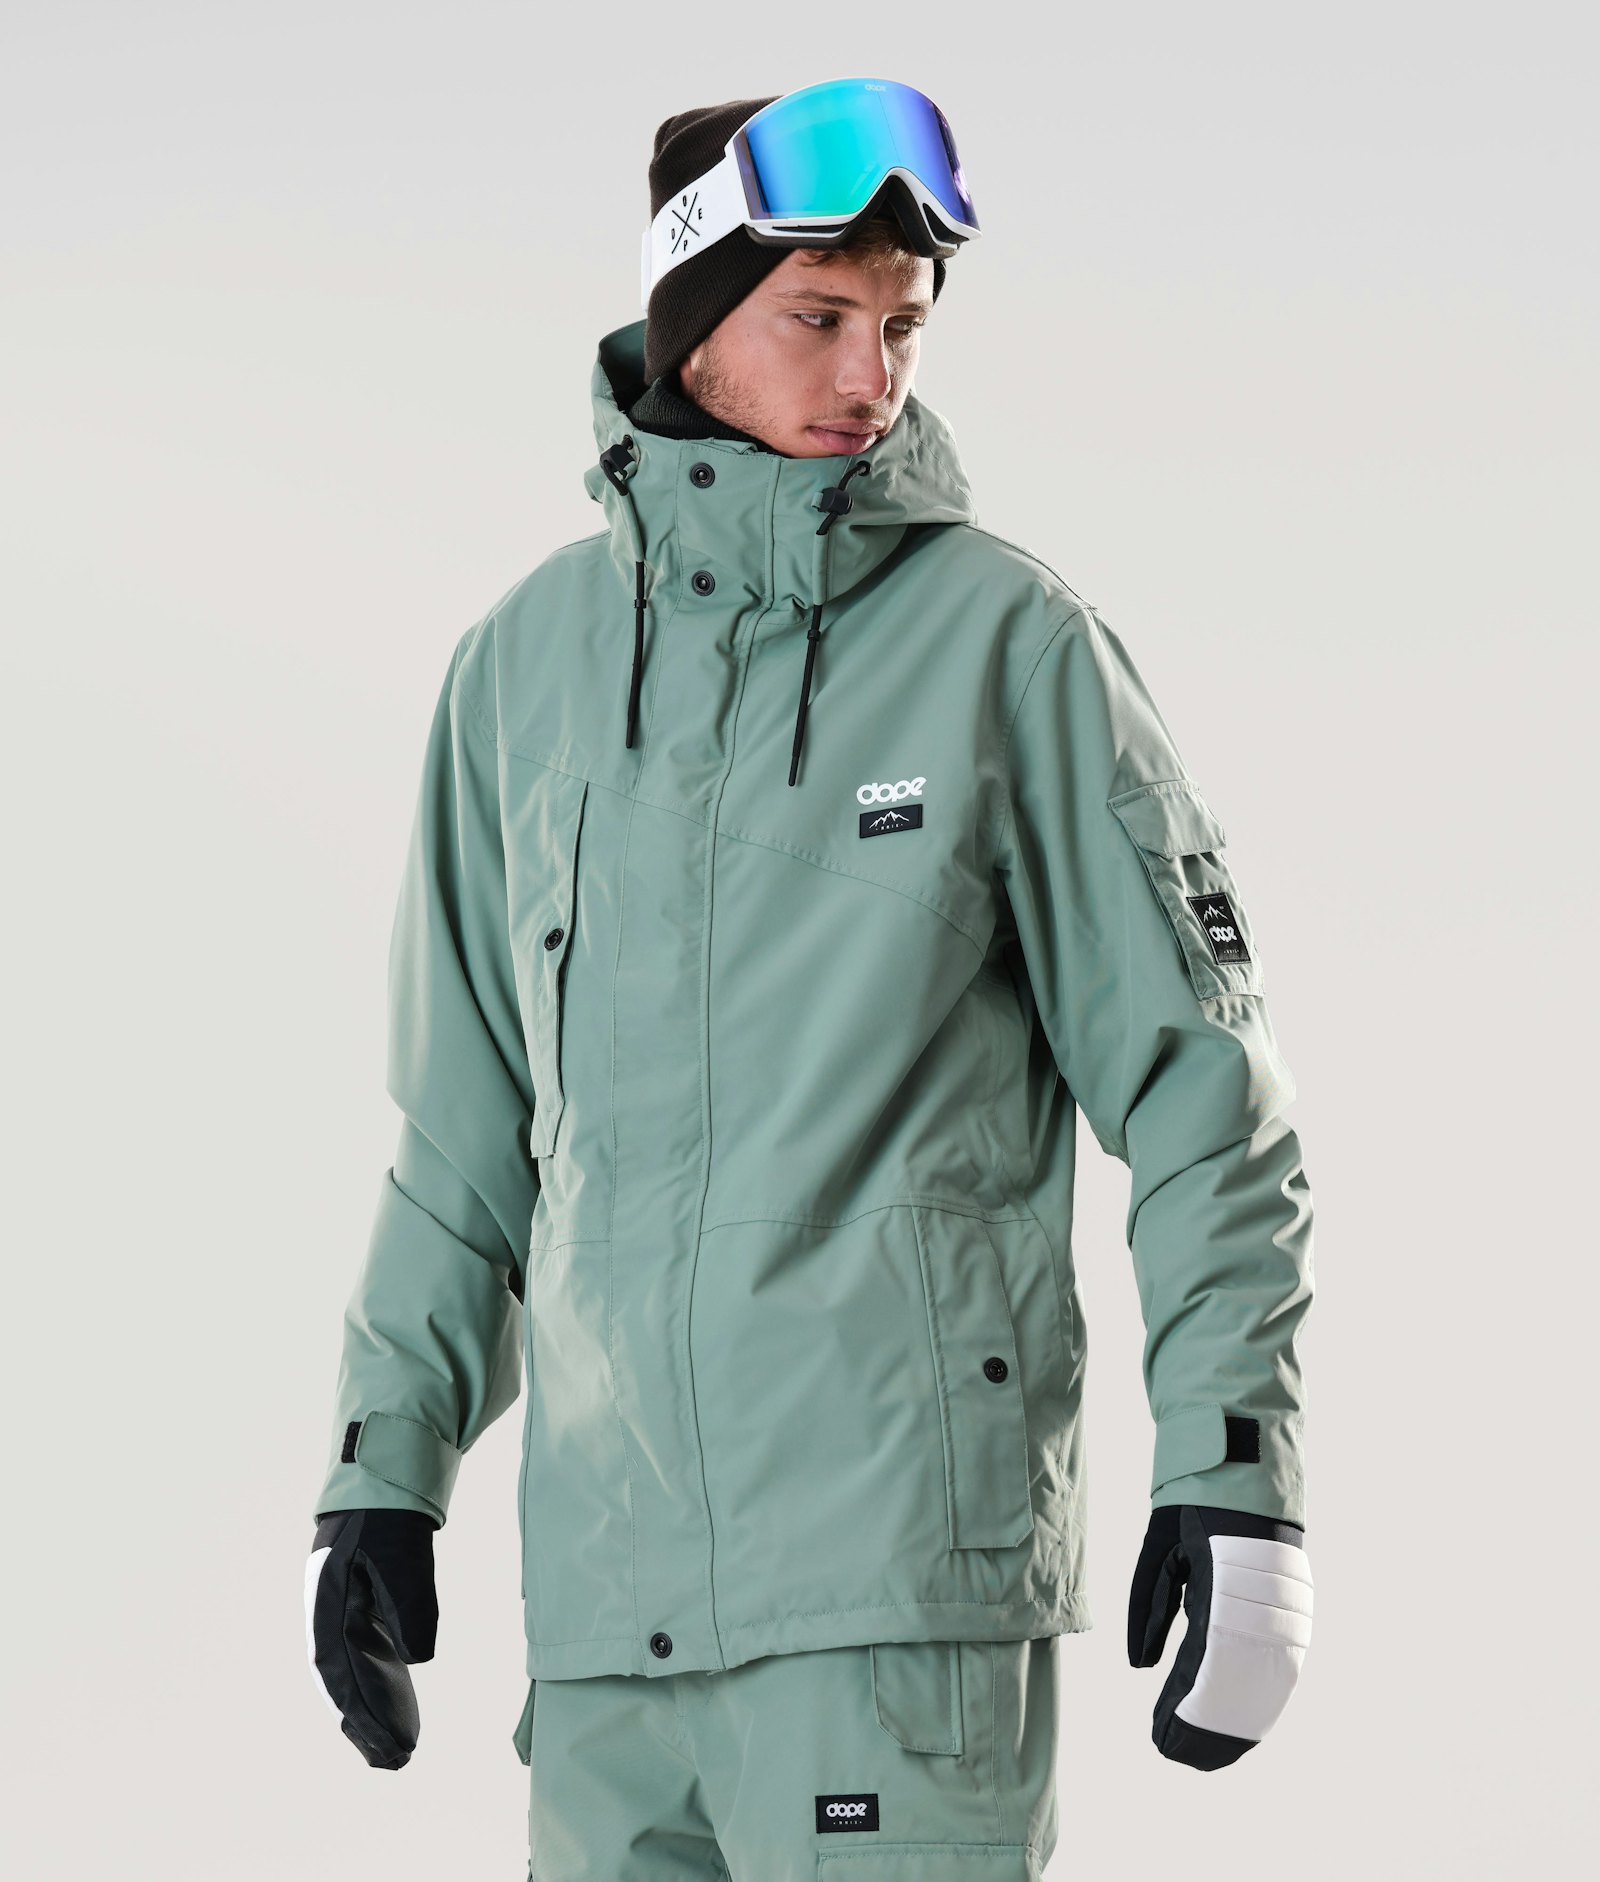 Adept 2020 Veste Snowboard Homme Faded Green